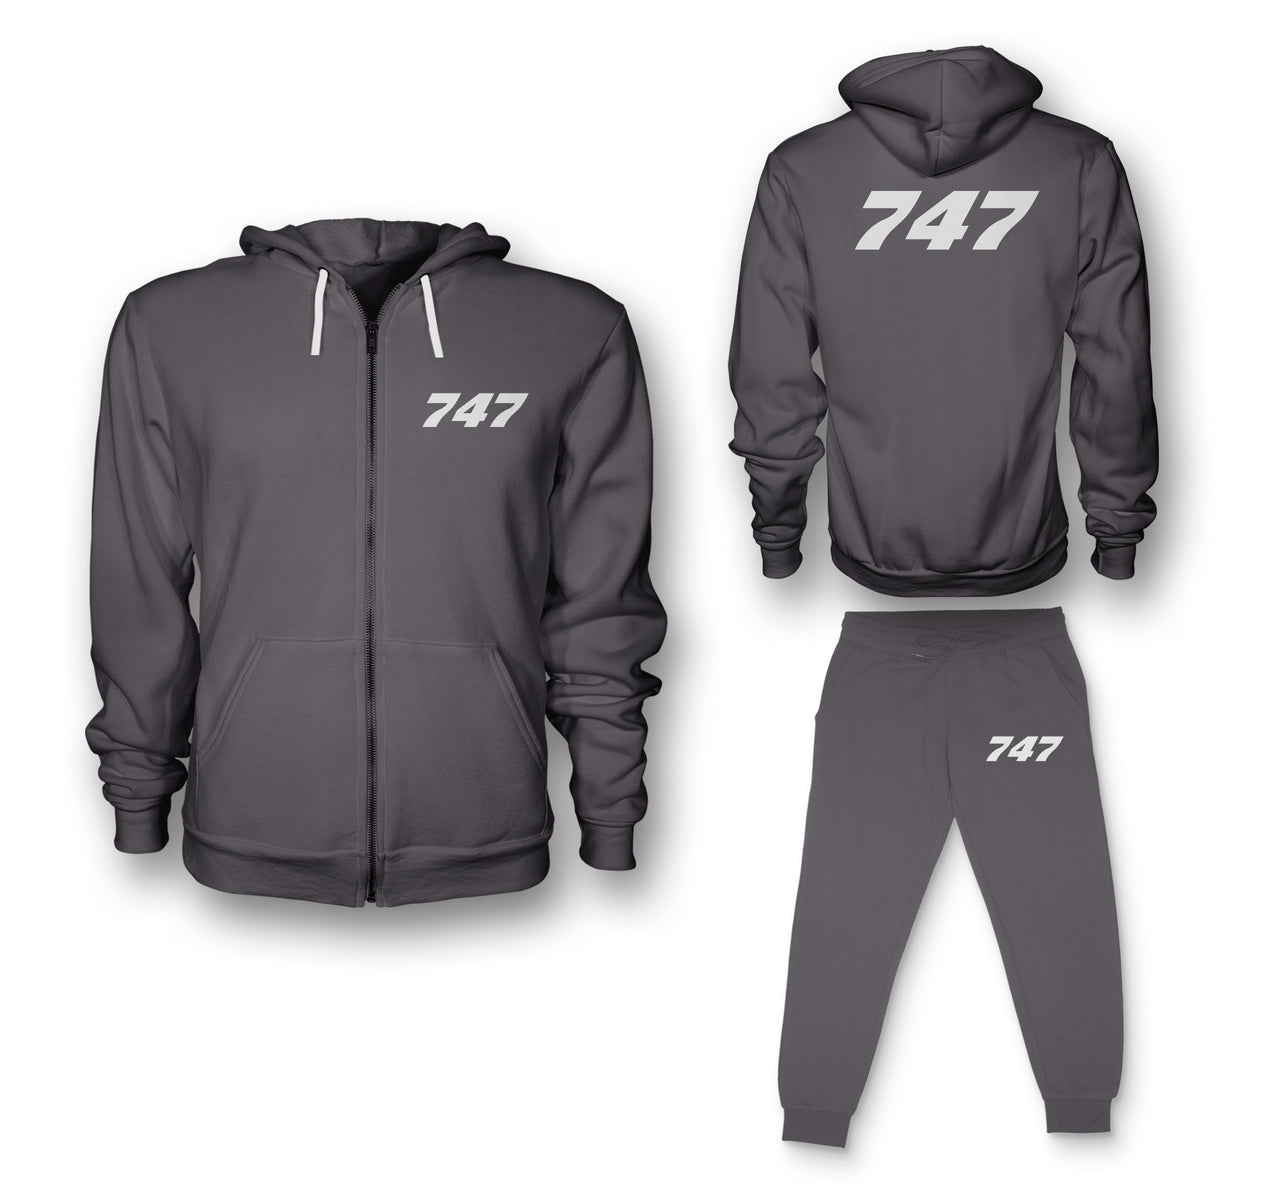 747 Flat Text Designed Zipped Hoodies & Sweatpants Set